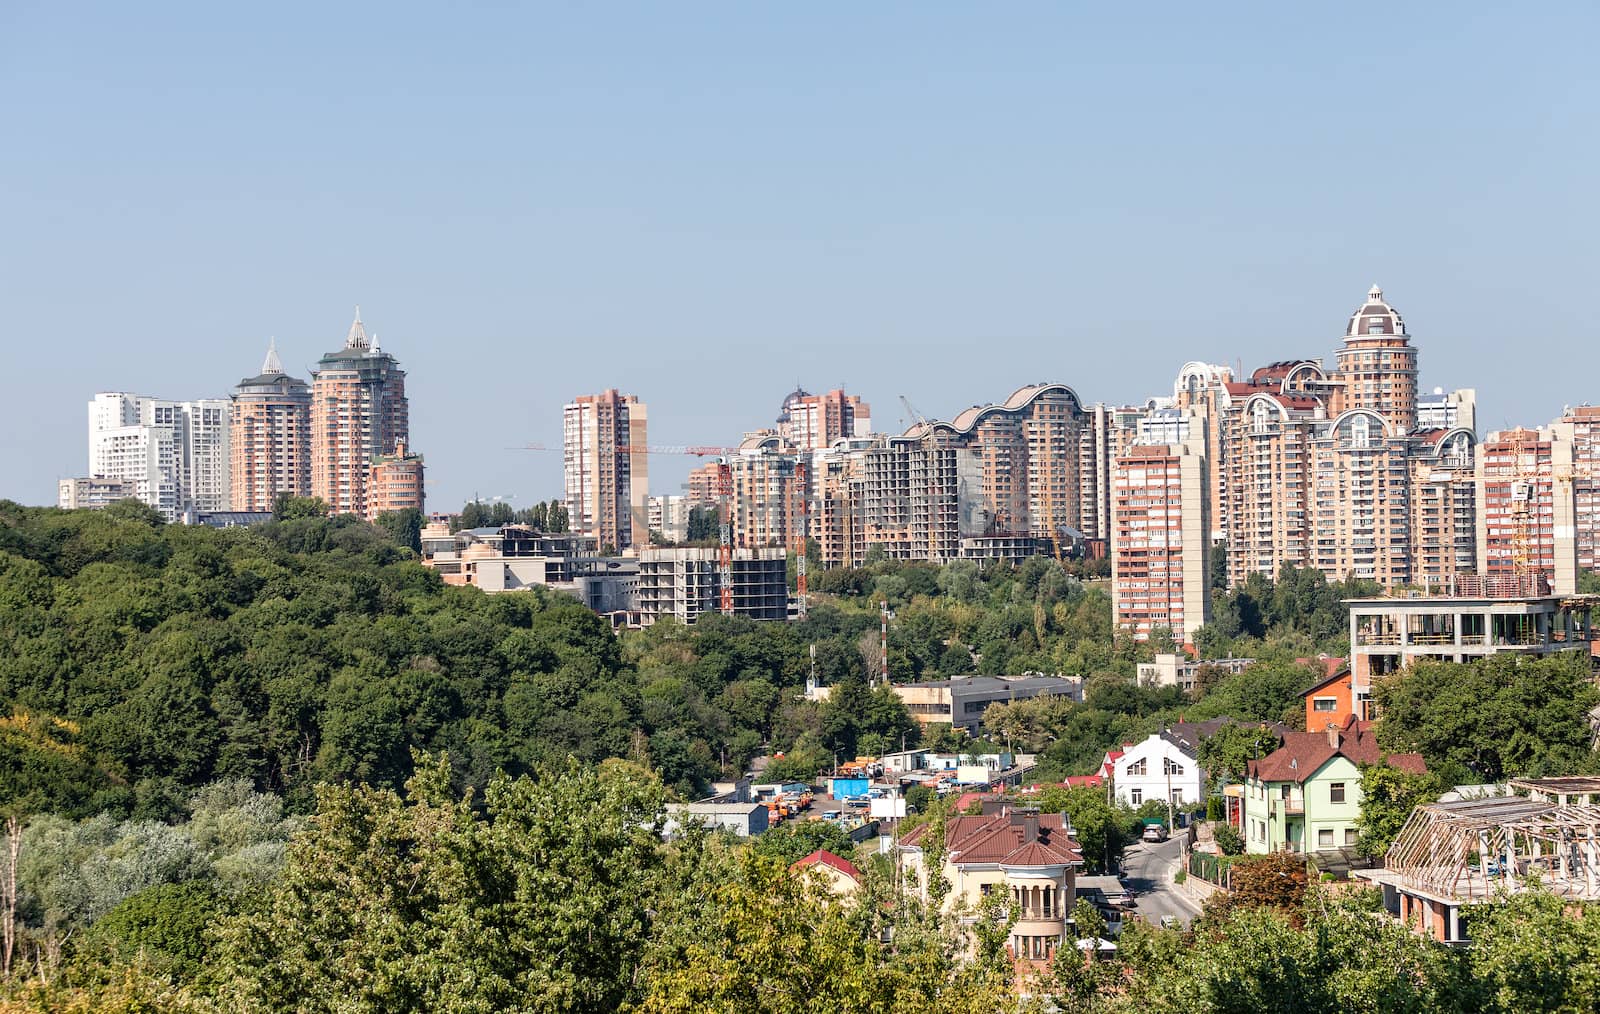 New houses of Kiev by palinchak